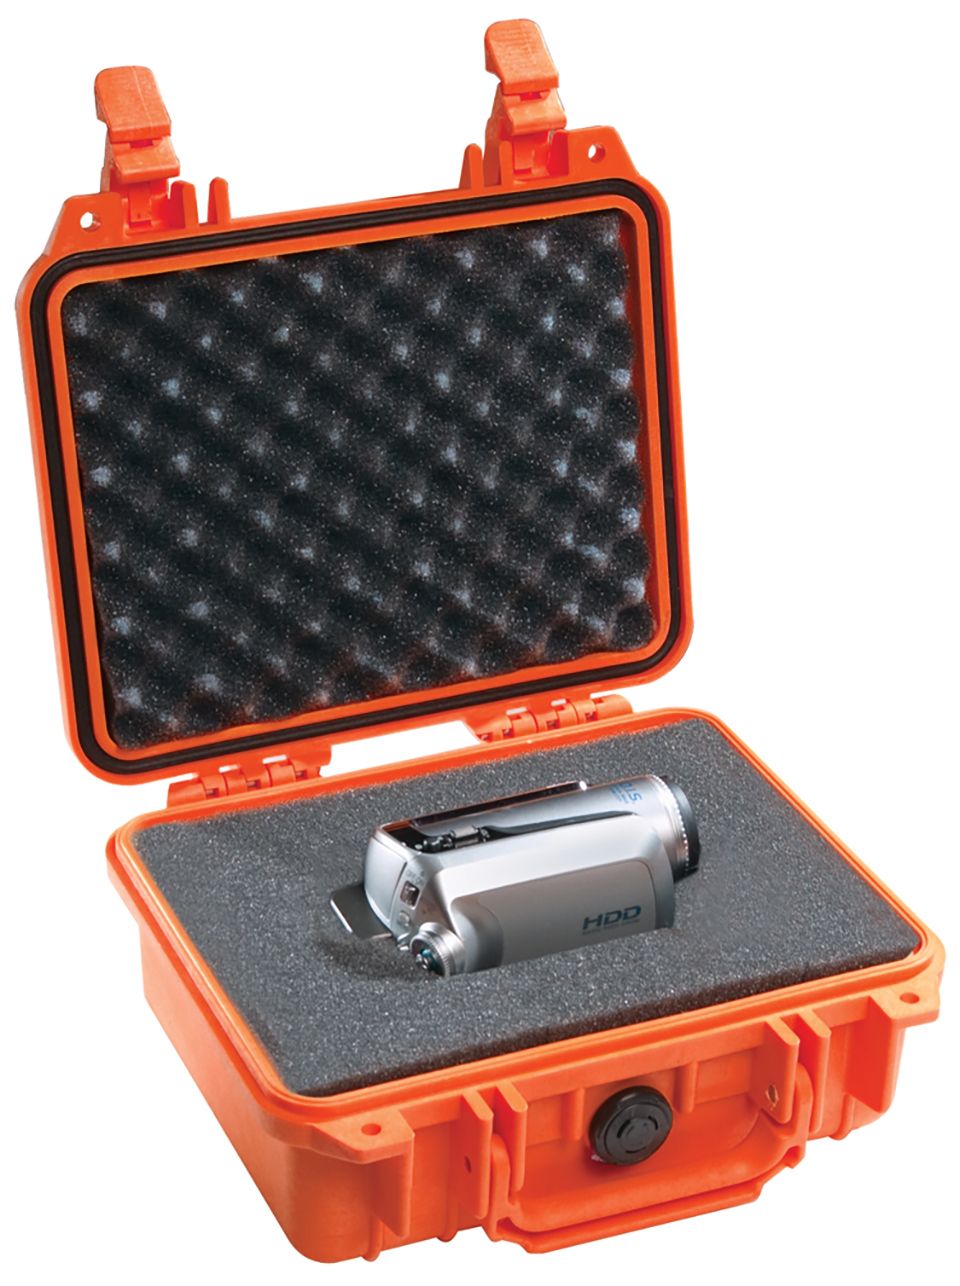  PELI™ 1200 Case with foam (orange)